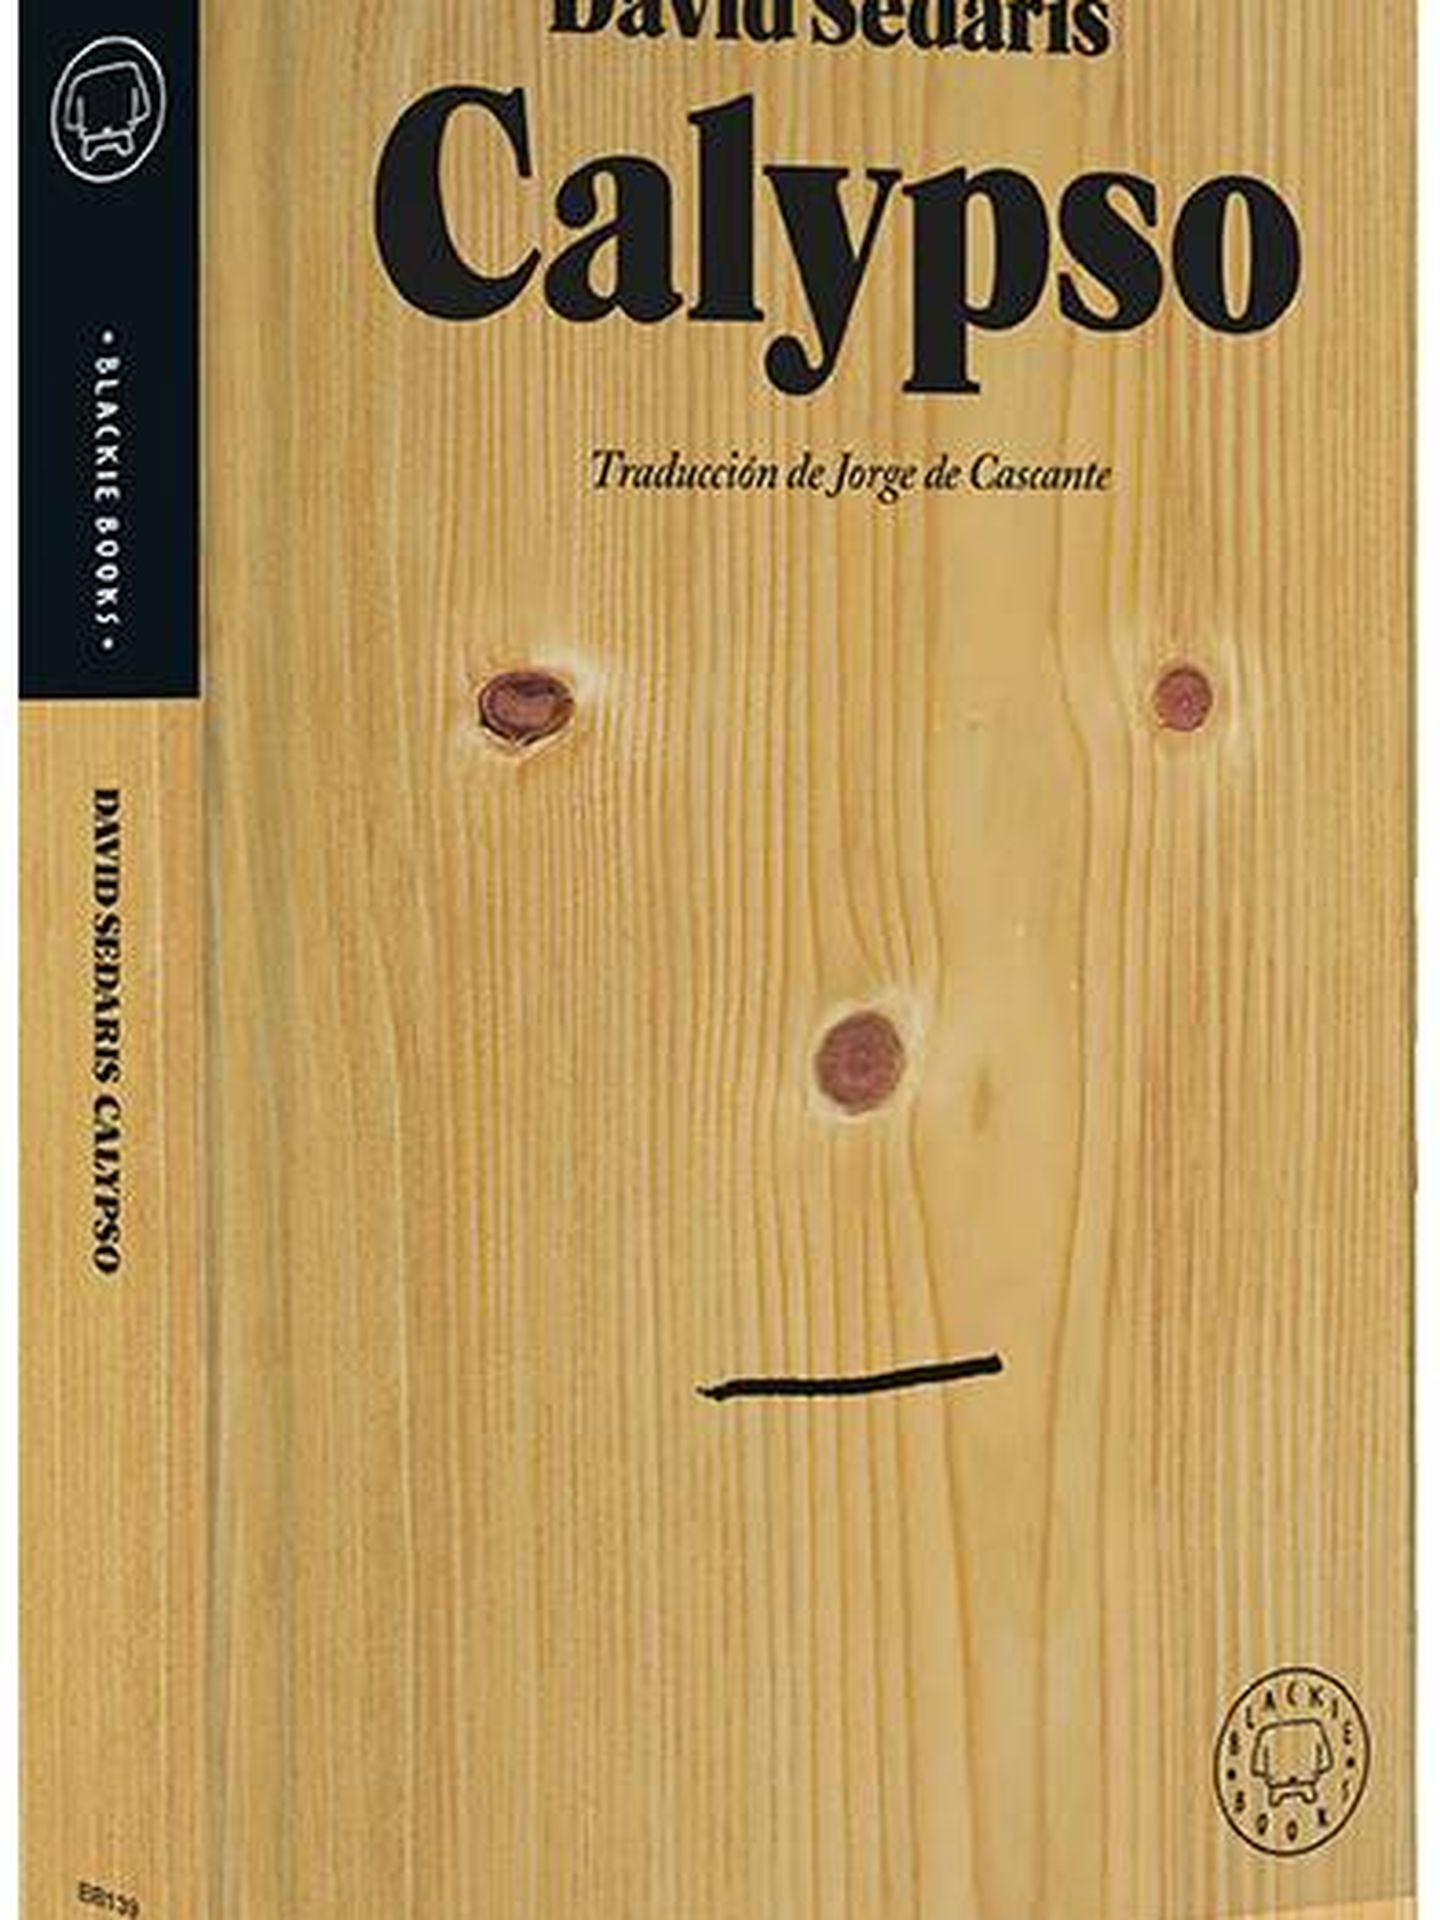 Portada de 'Calypso', de David Sedaris. (Blackie Books)